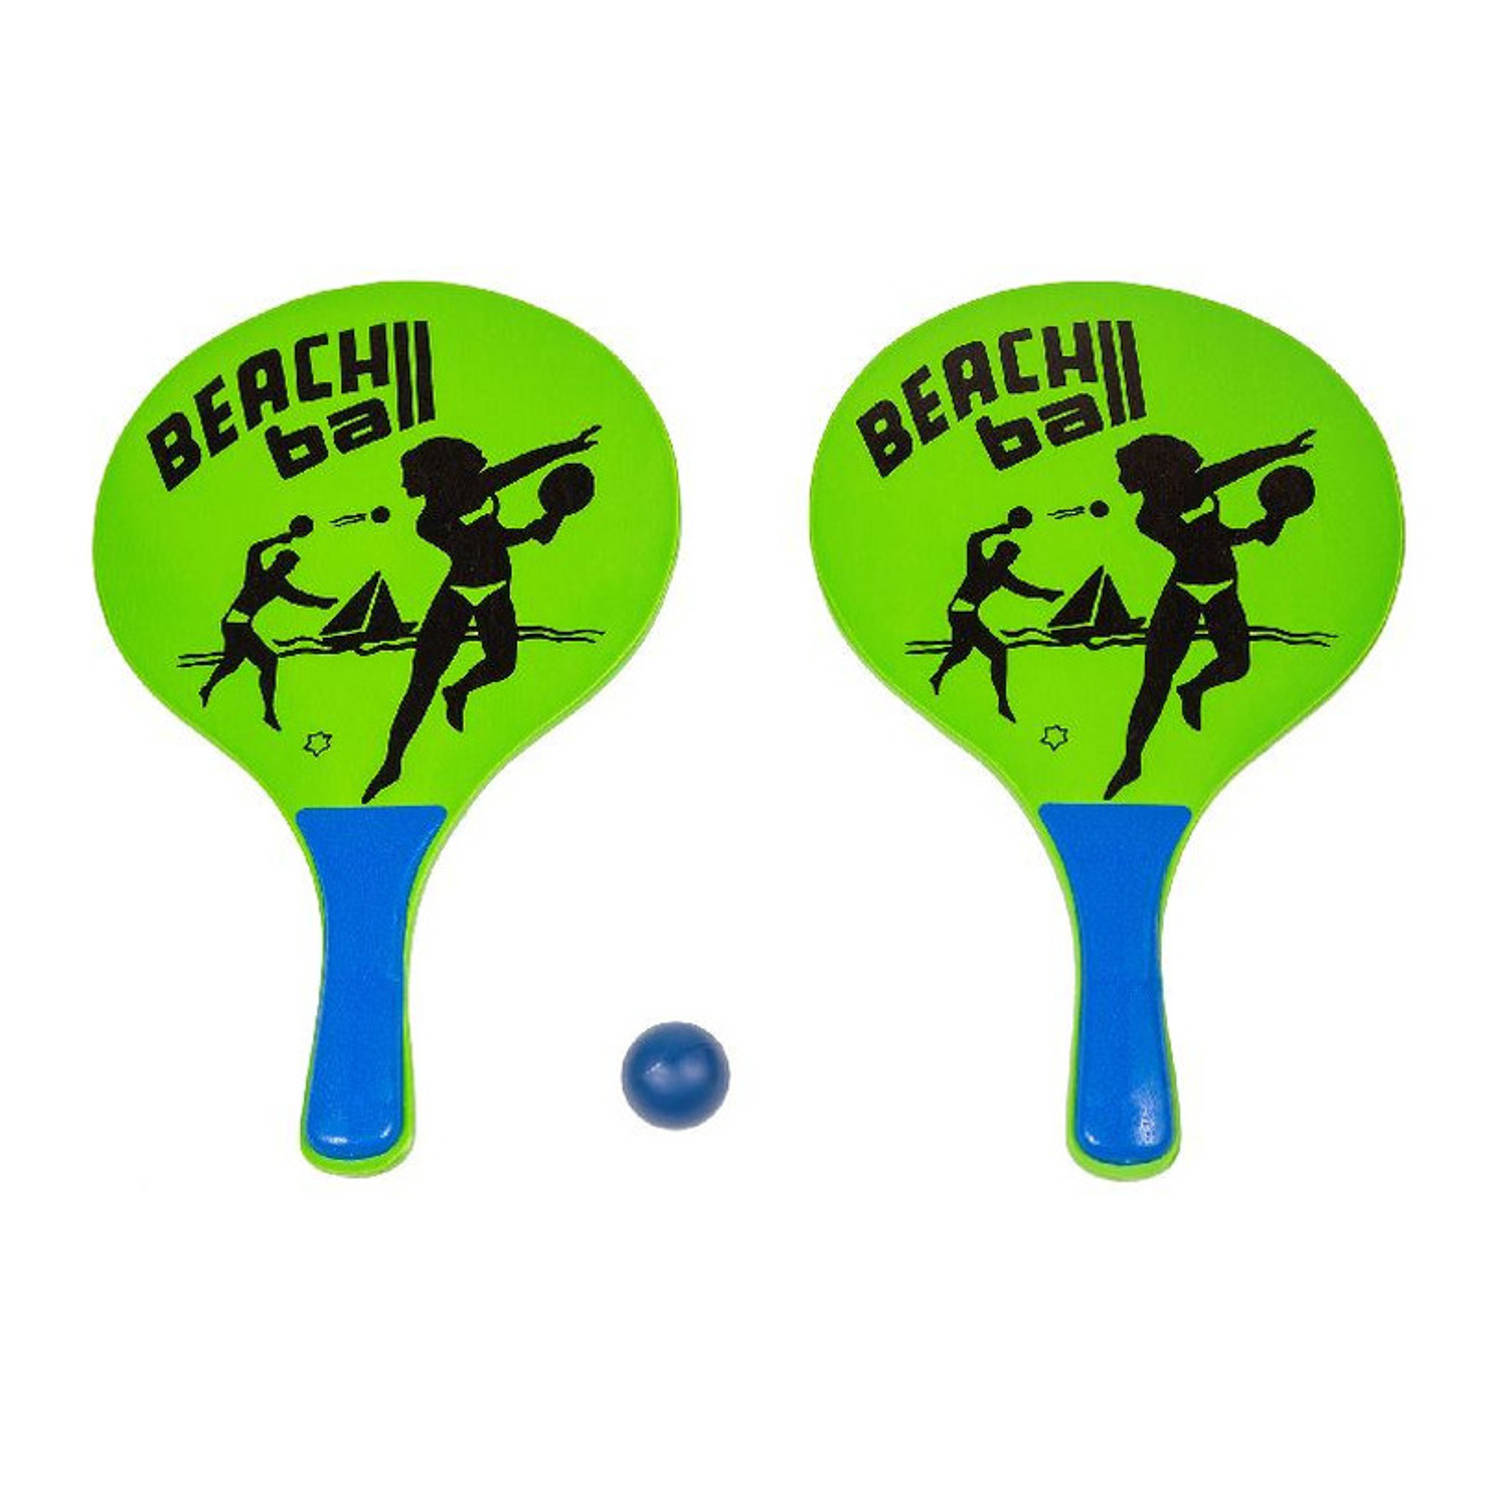 Houten beachball set groen met beachball print - Beachballsets